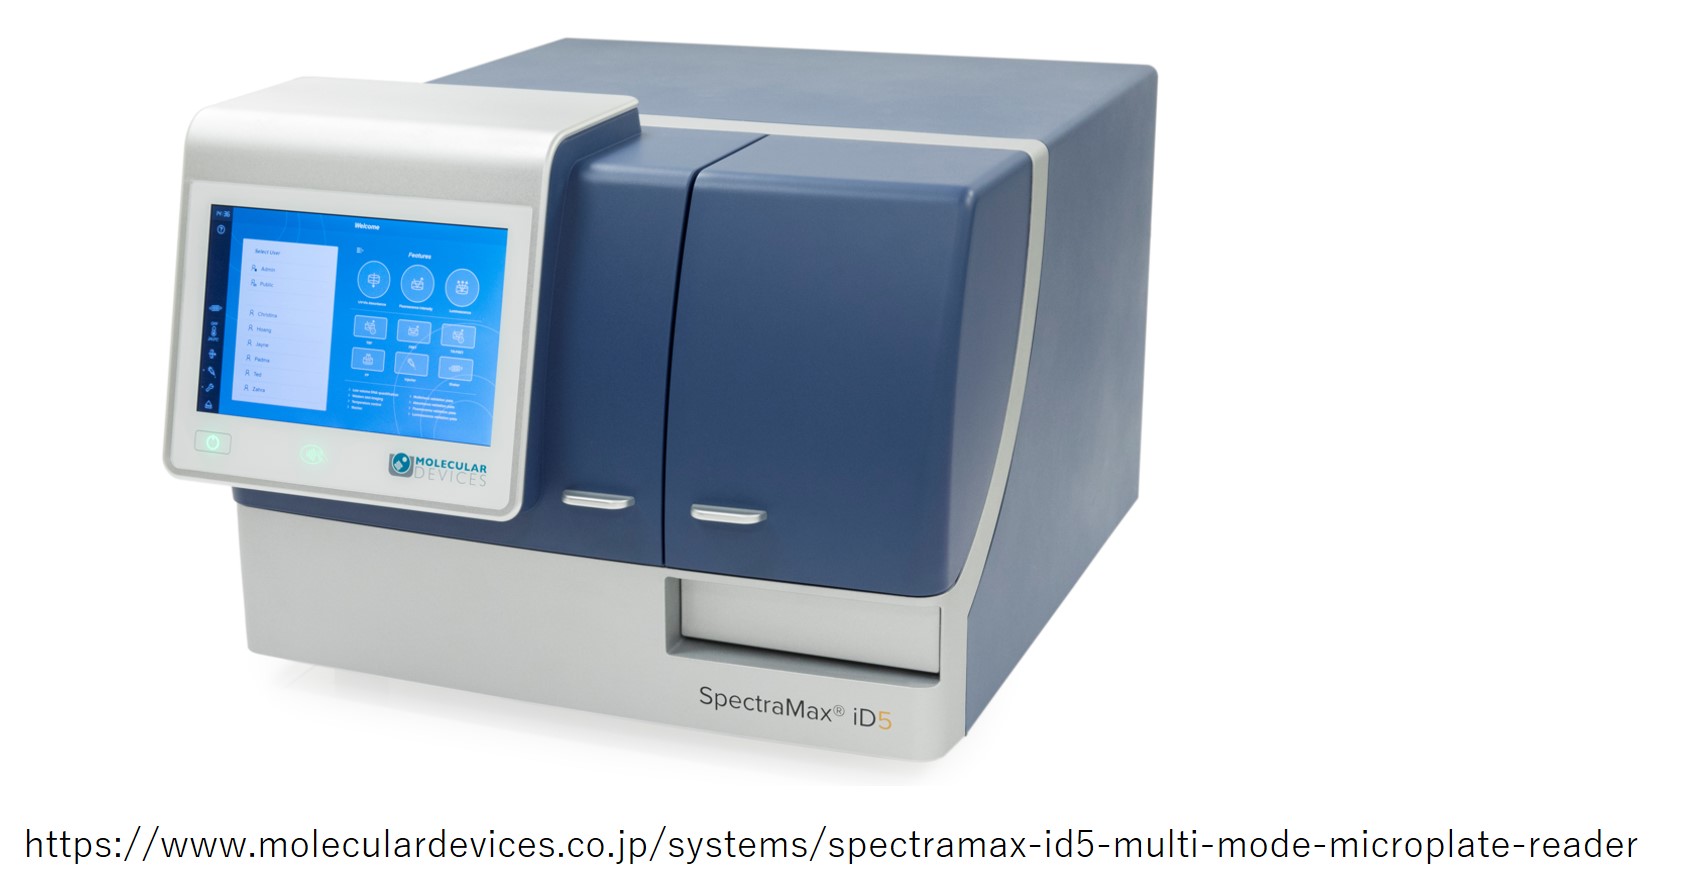 SpectraMax iD5 (MOLECULAR DEVICES)